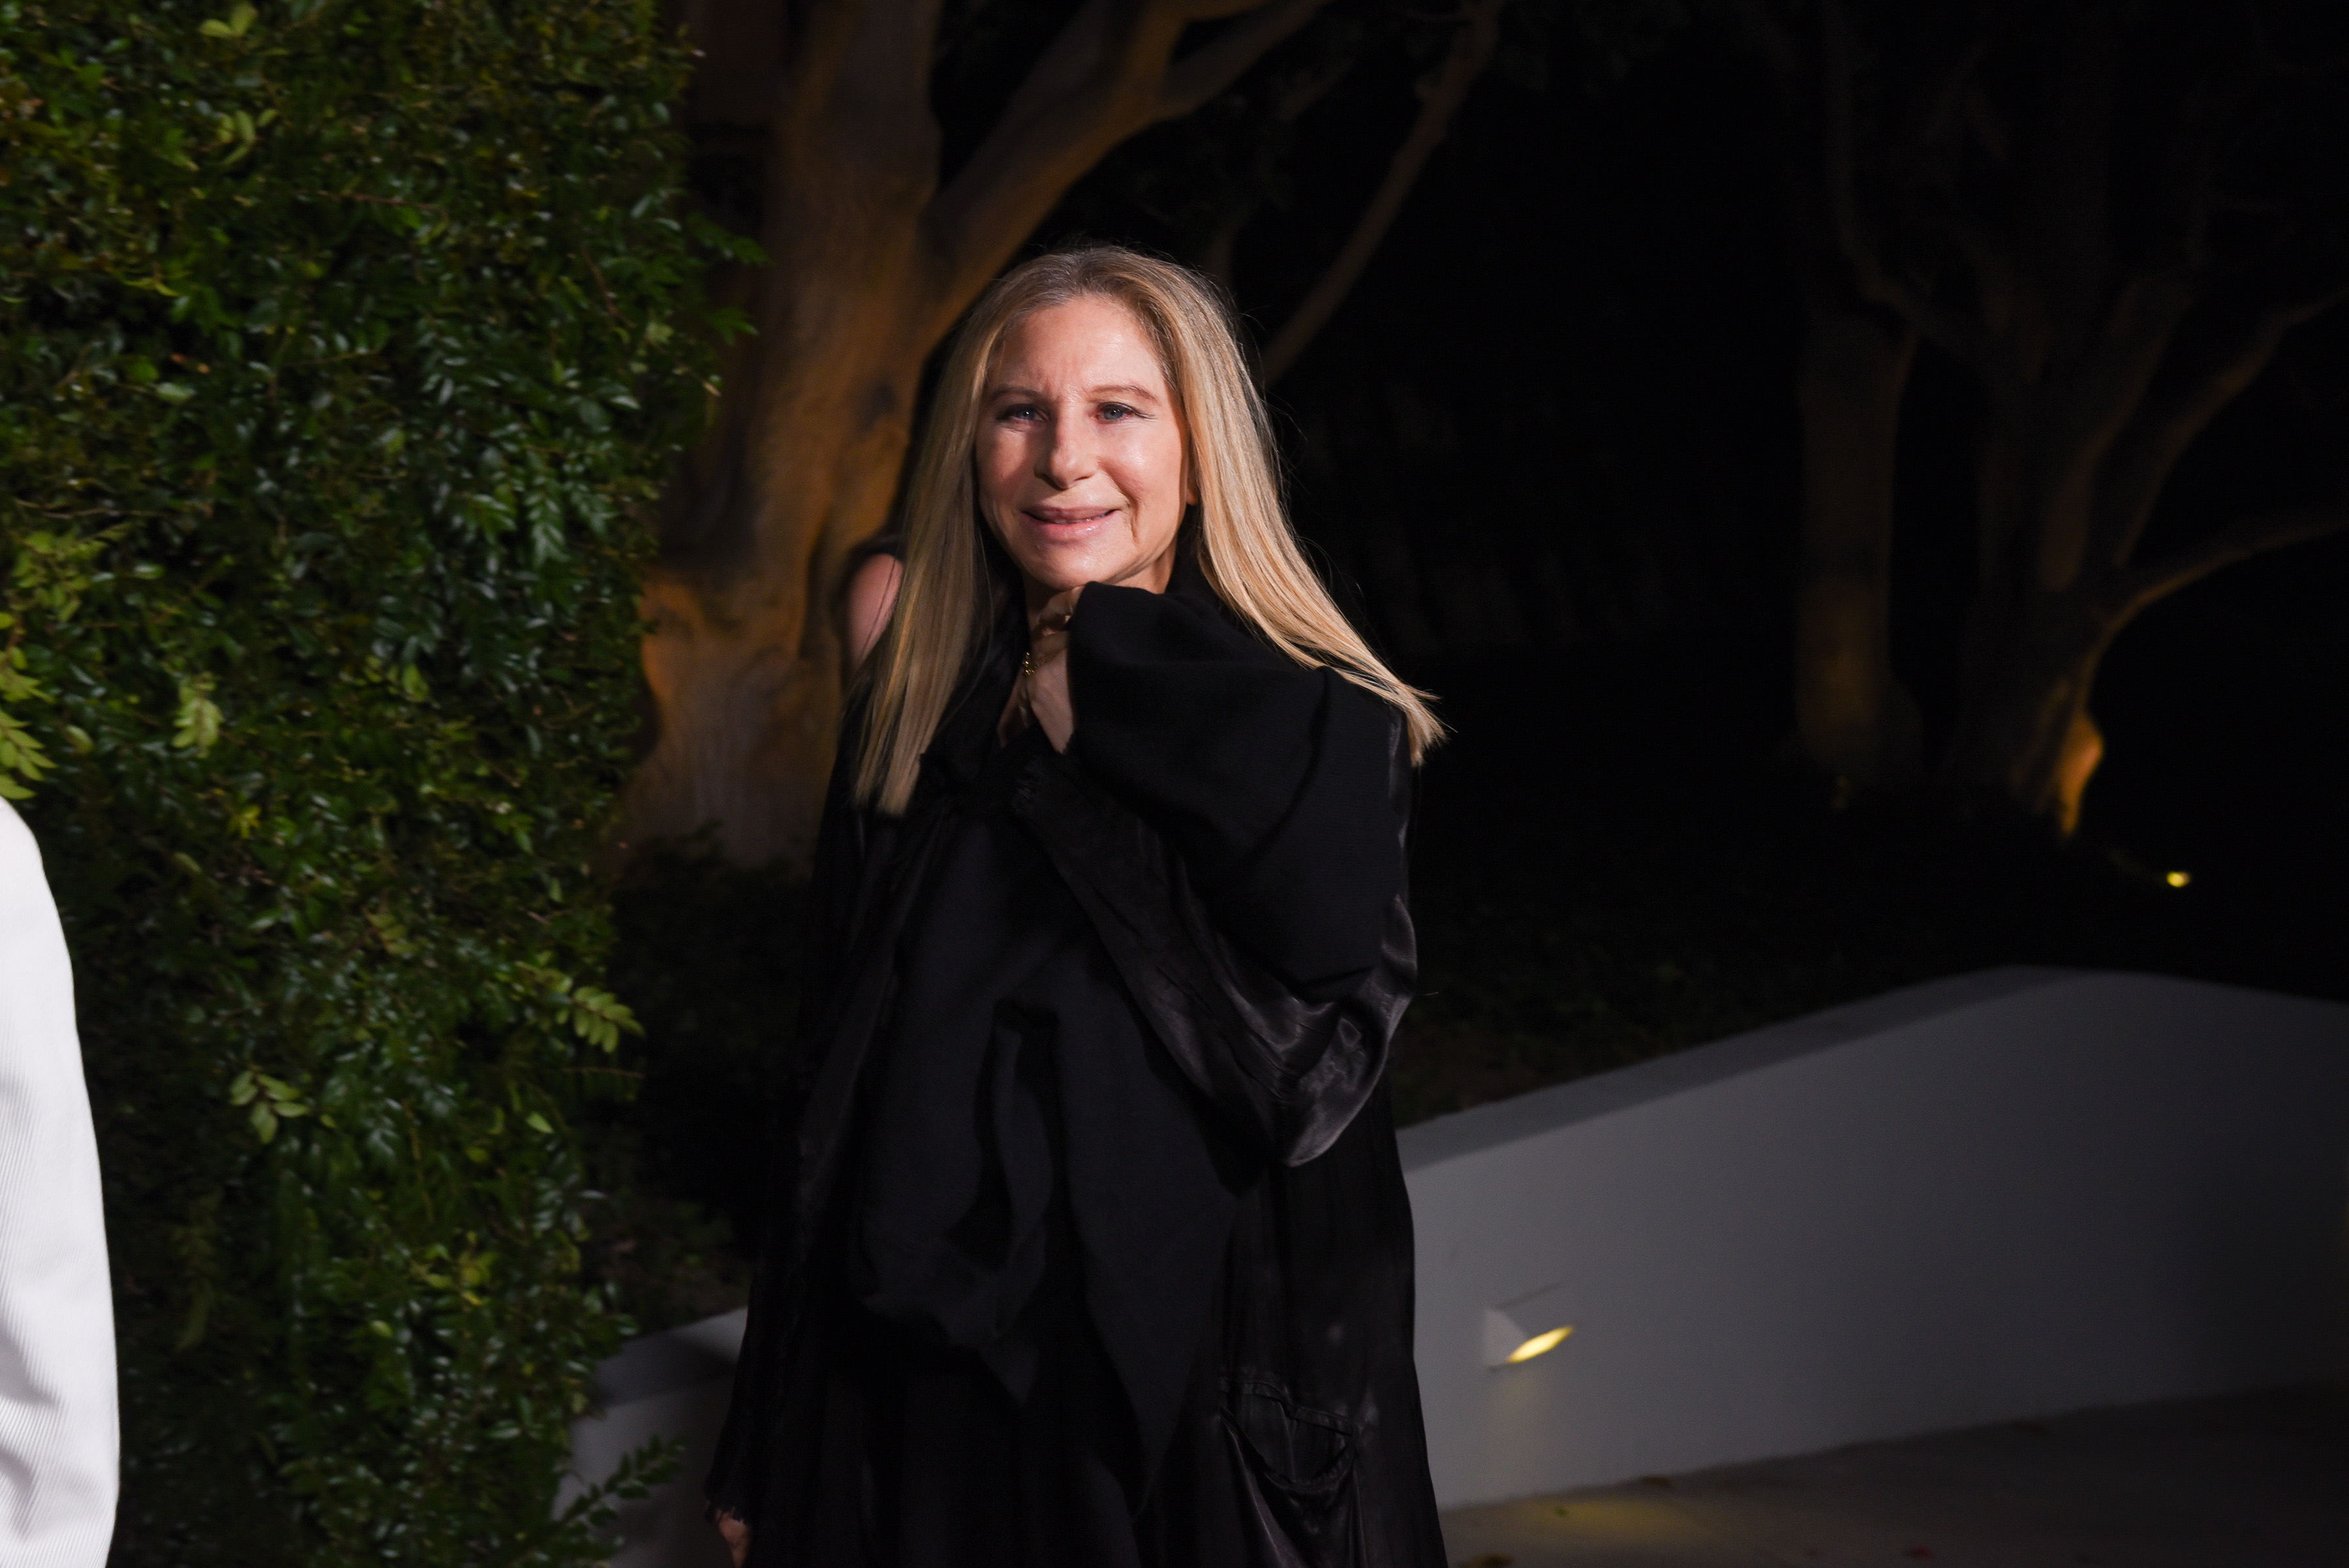 Barbra Streisand Institute To Open At UCLA